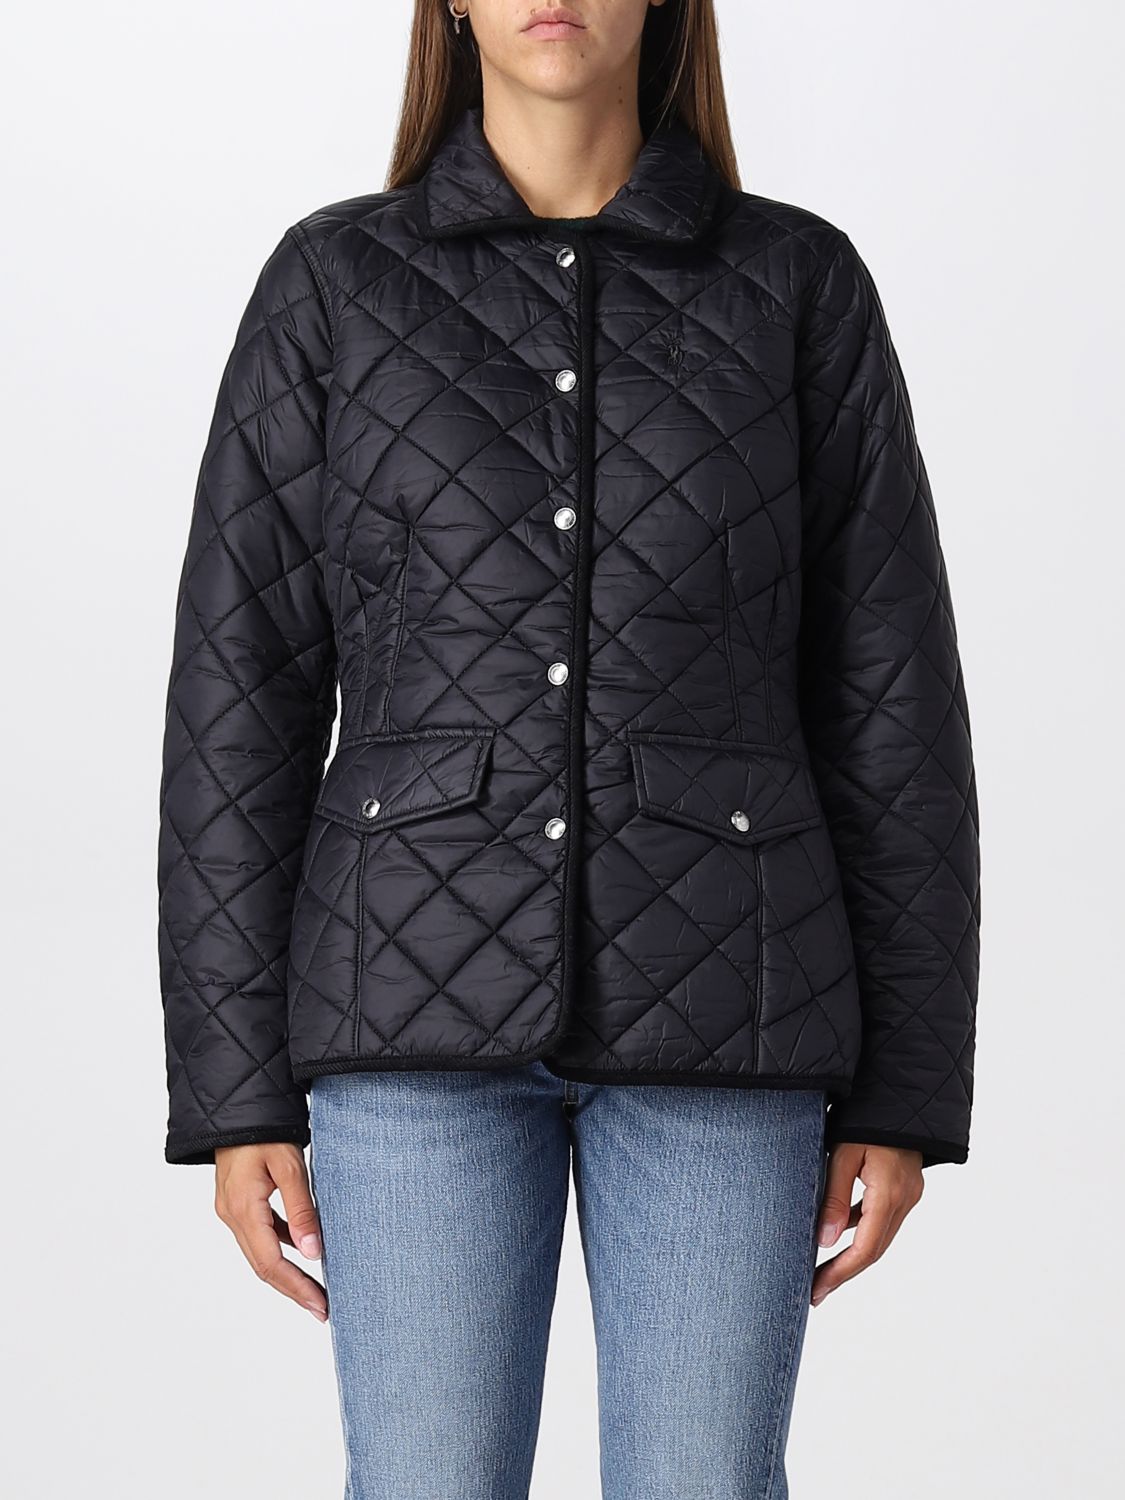 POLO RALPH LAUREN: jacket for women - Black | Polo Ralph Lauren jacket  211854764 online on 